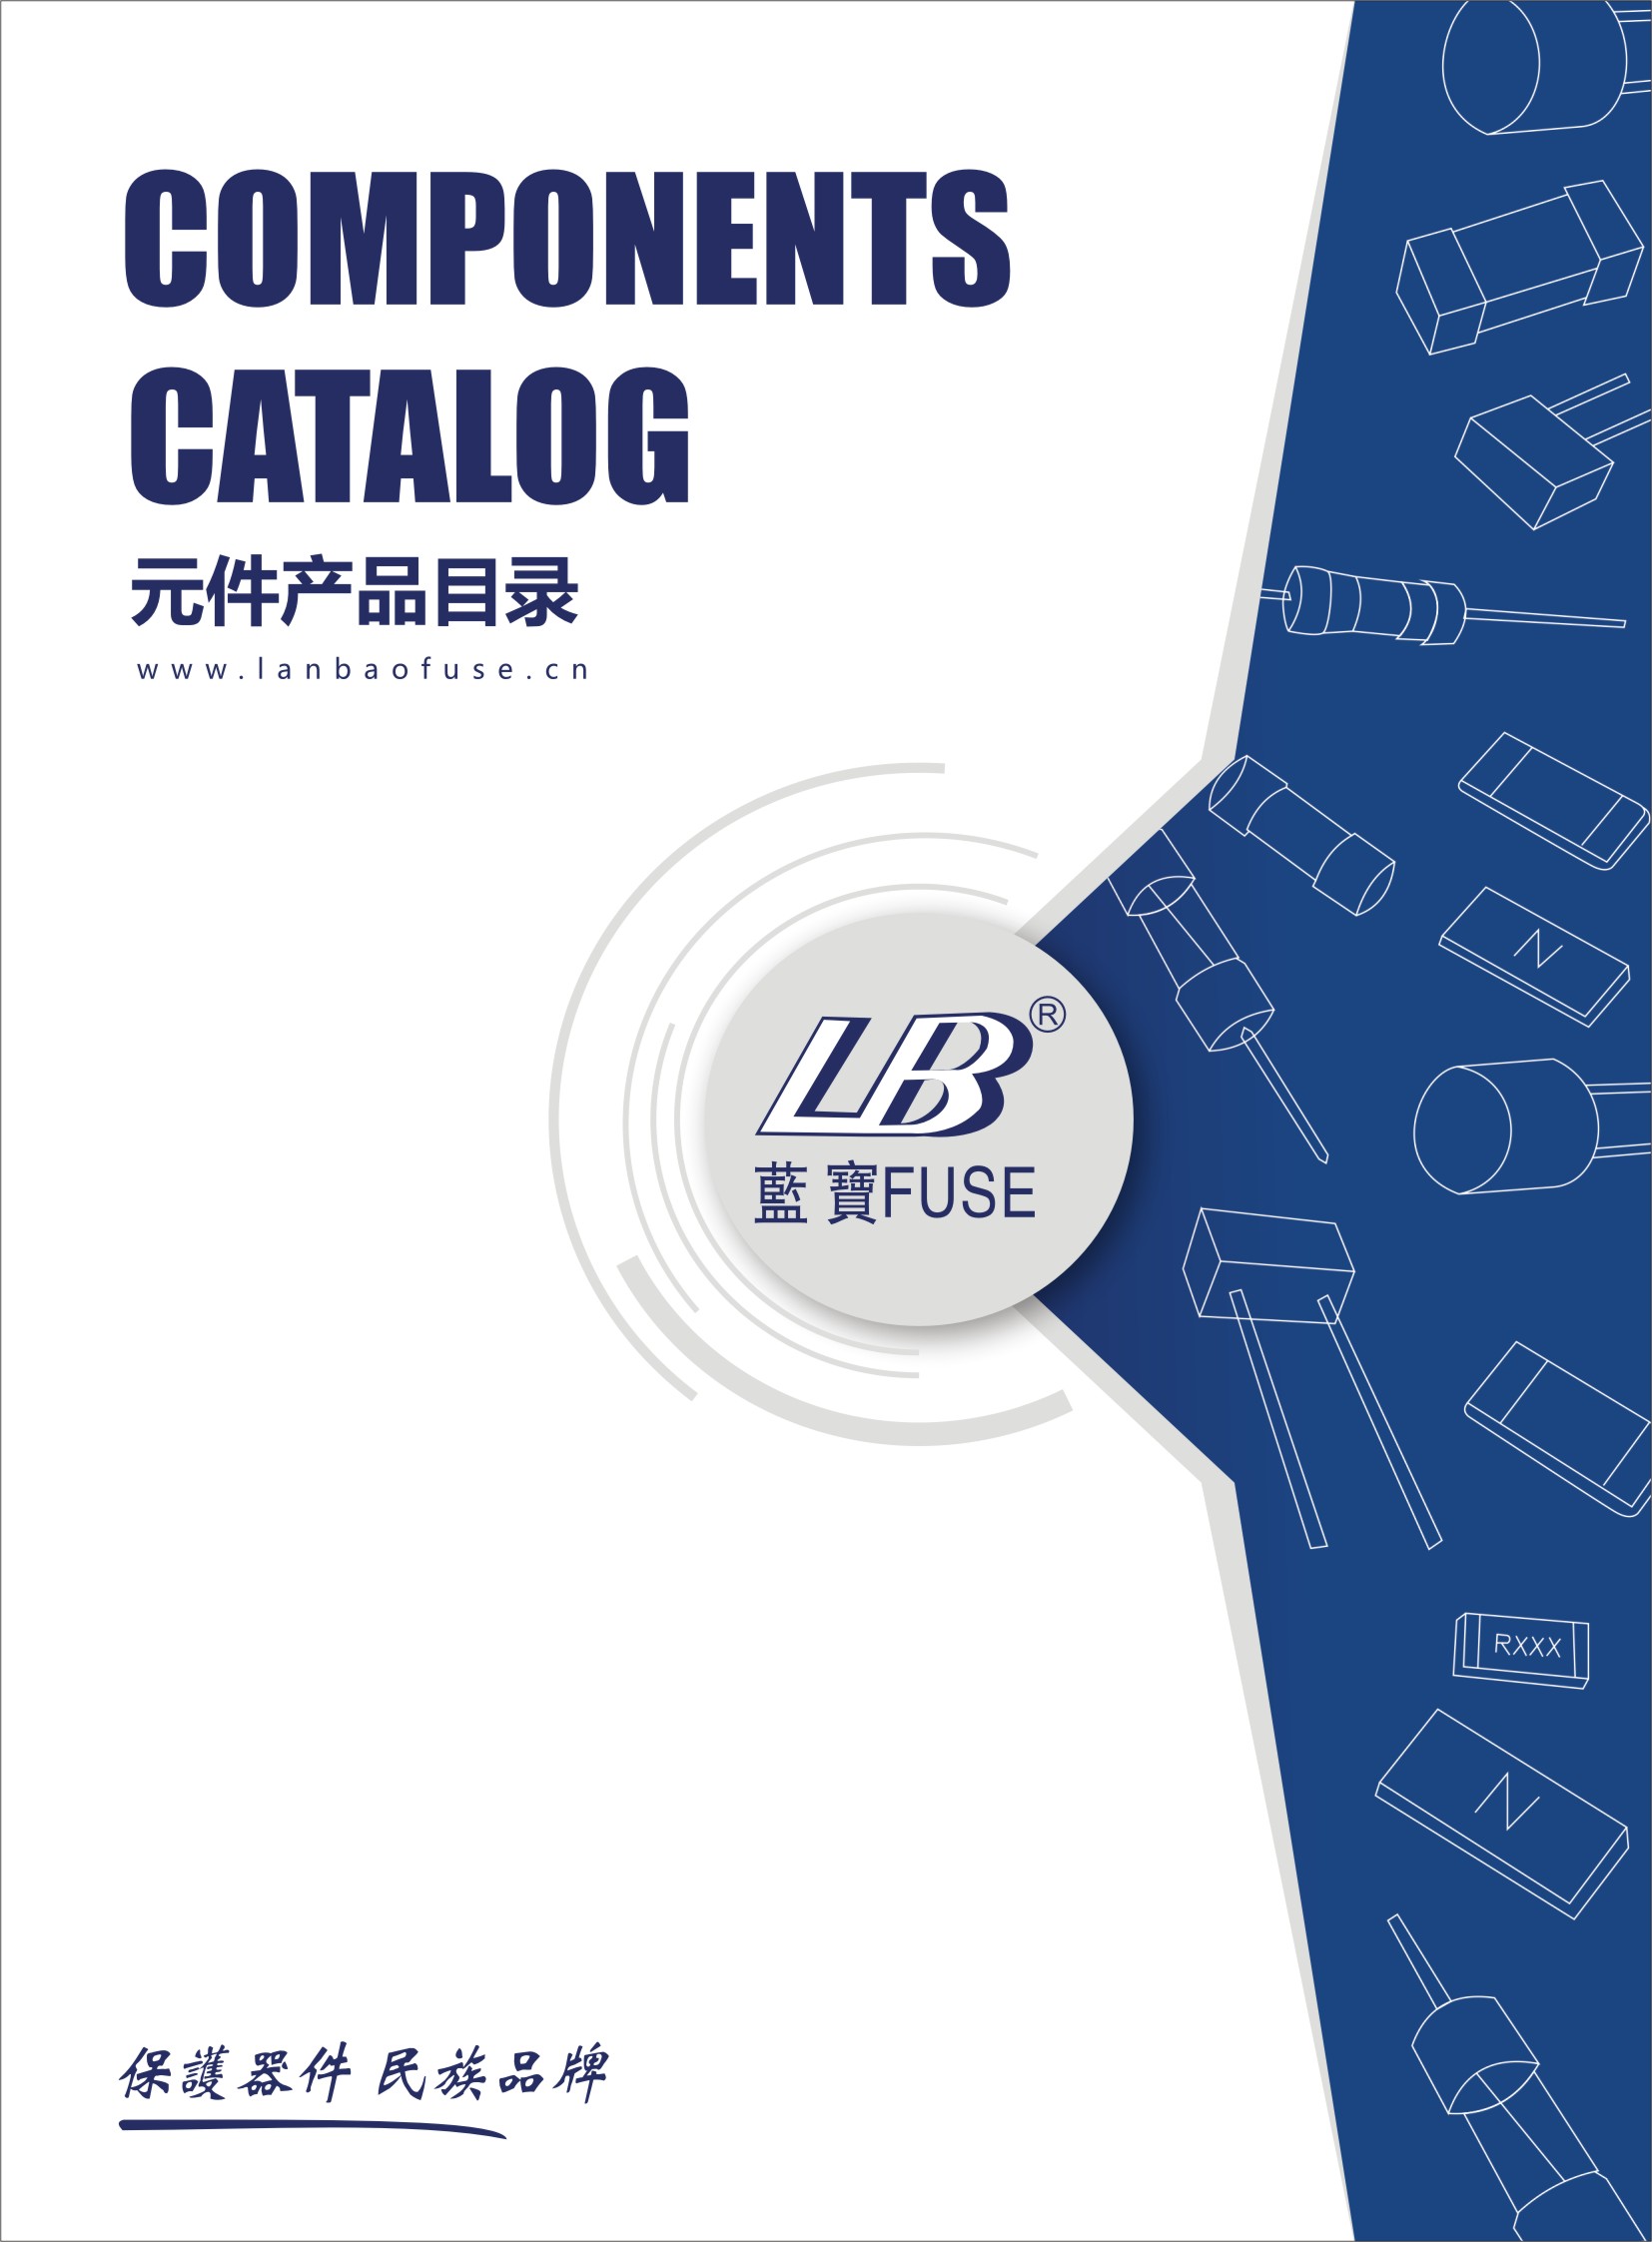 Lanbaofuse promotion and product catalog